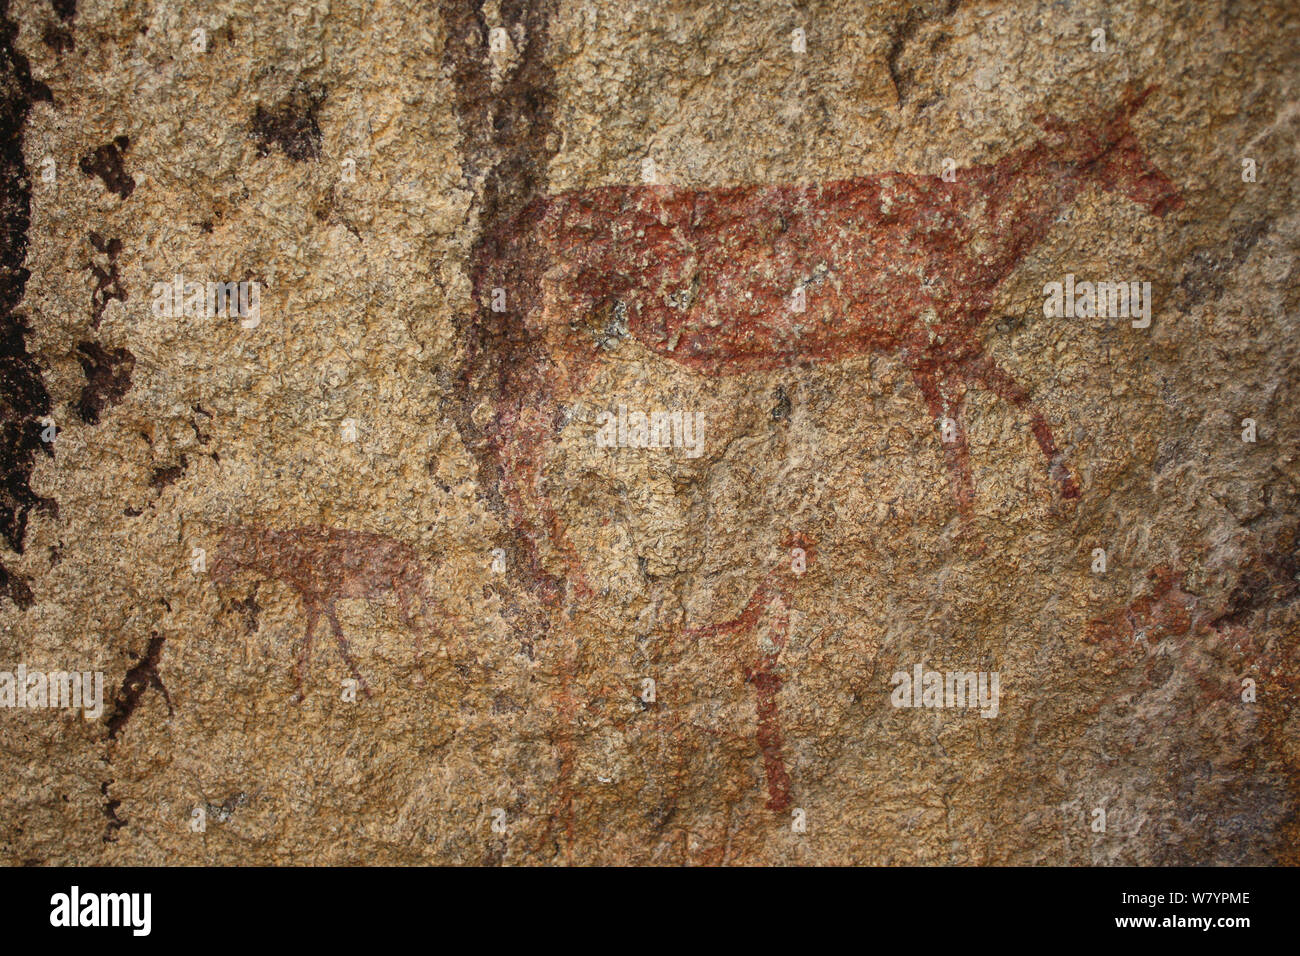 San rock painting antelope, Matobo Hills, Zimbabwe. January 2011. Stock Photo